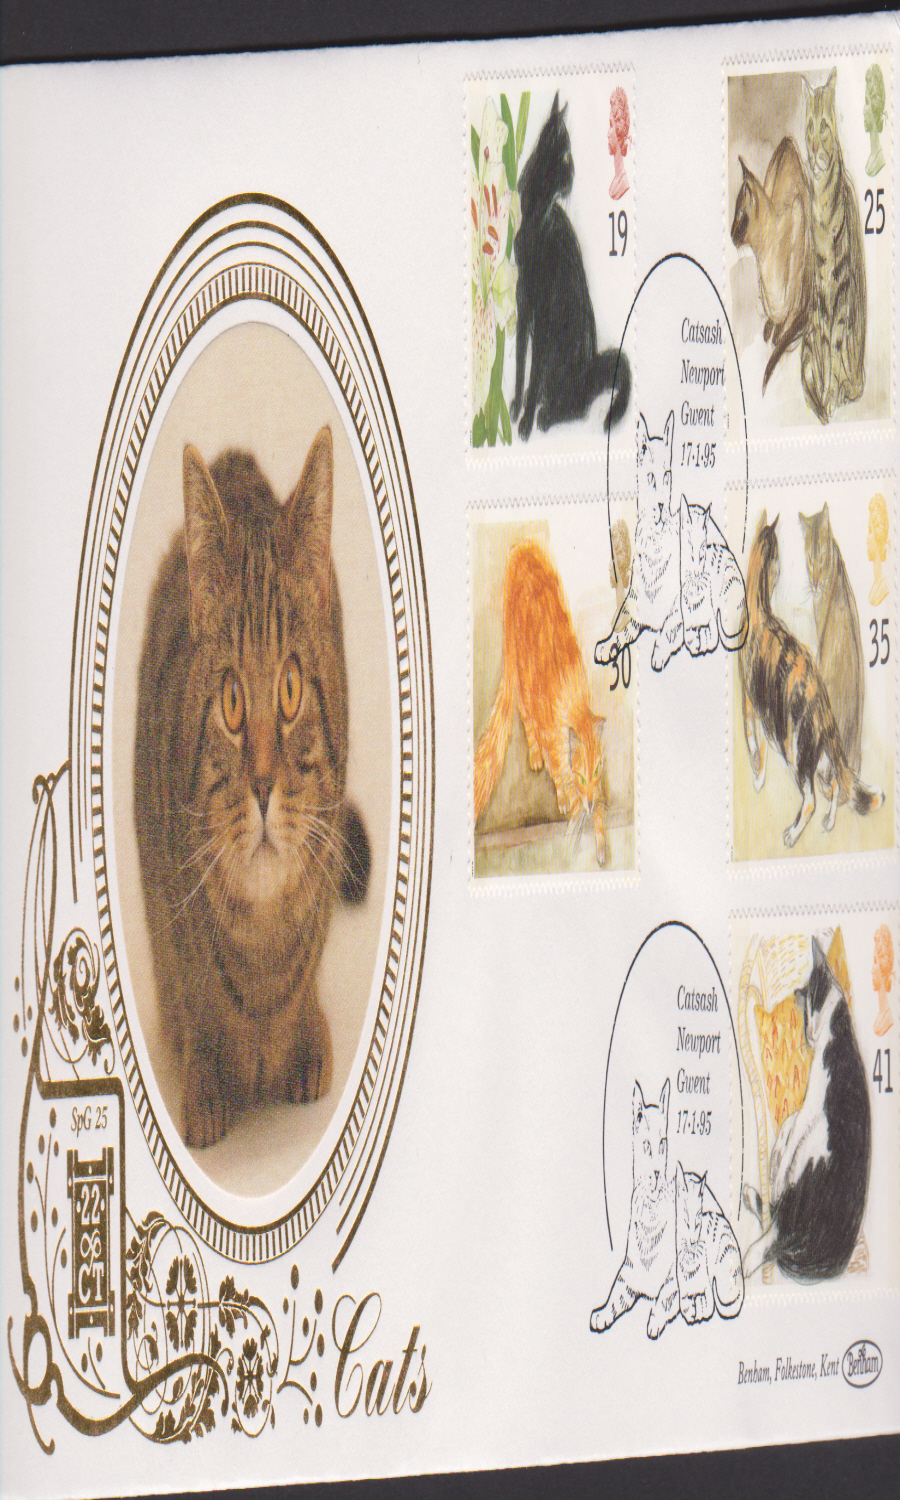 1995 -Benham Cats First Day Cover - Catsash Postmark SPG25